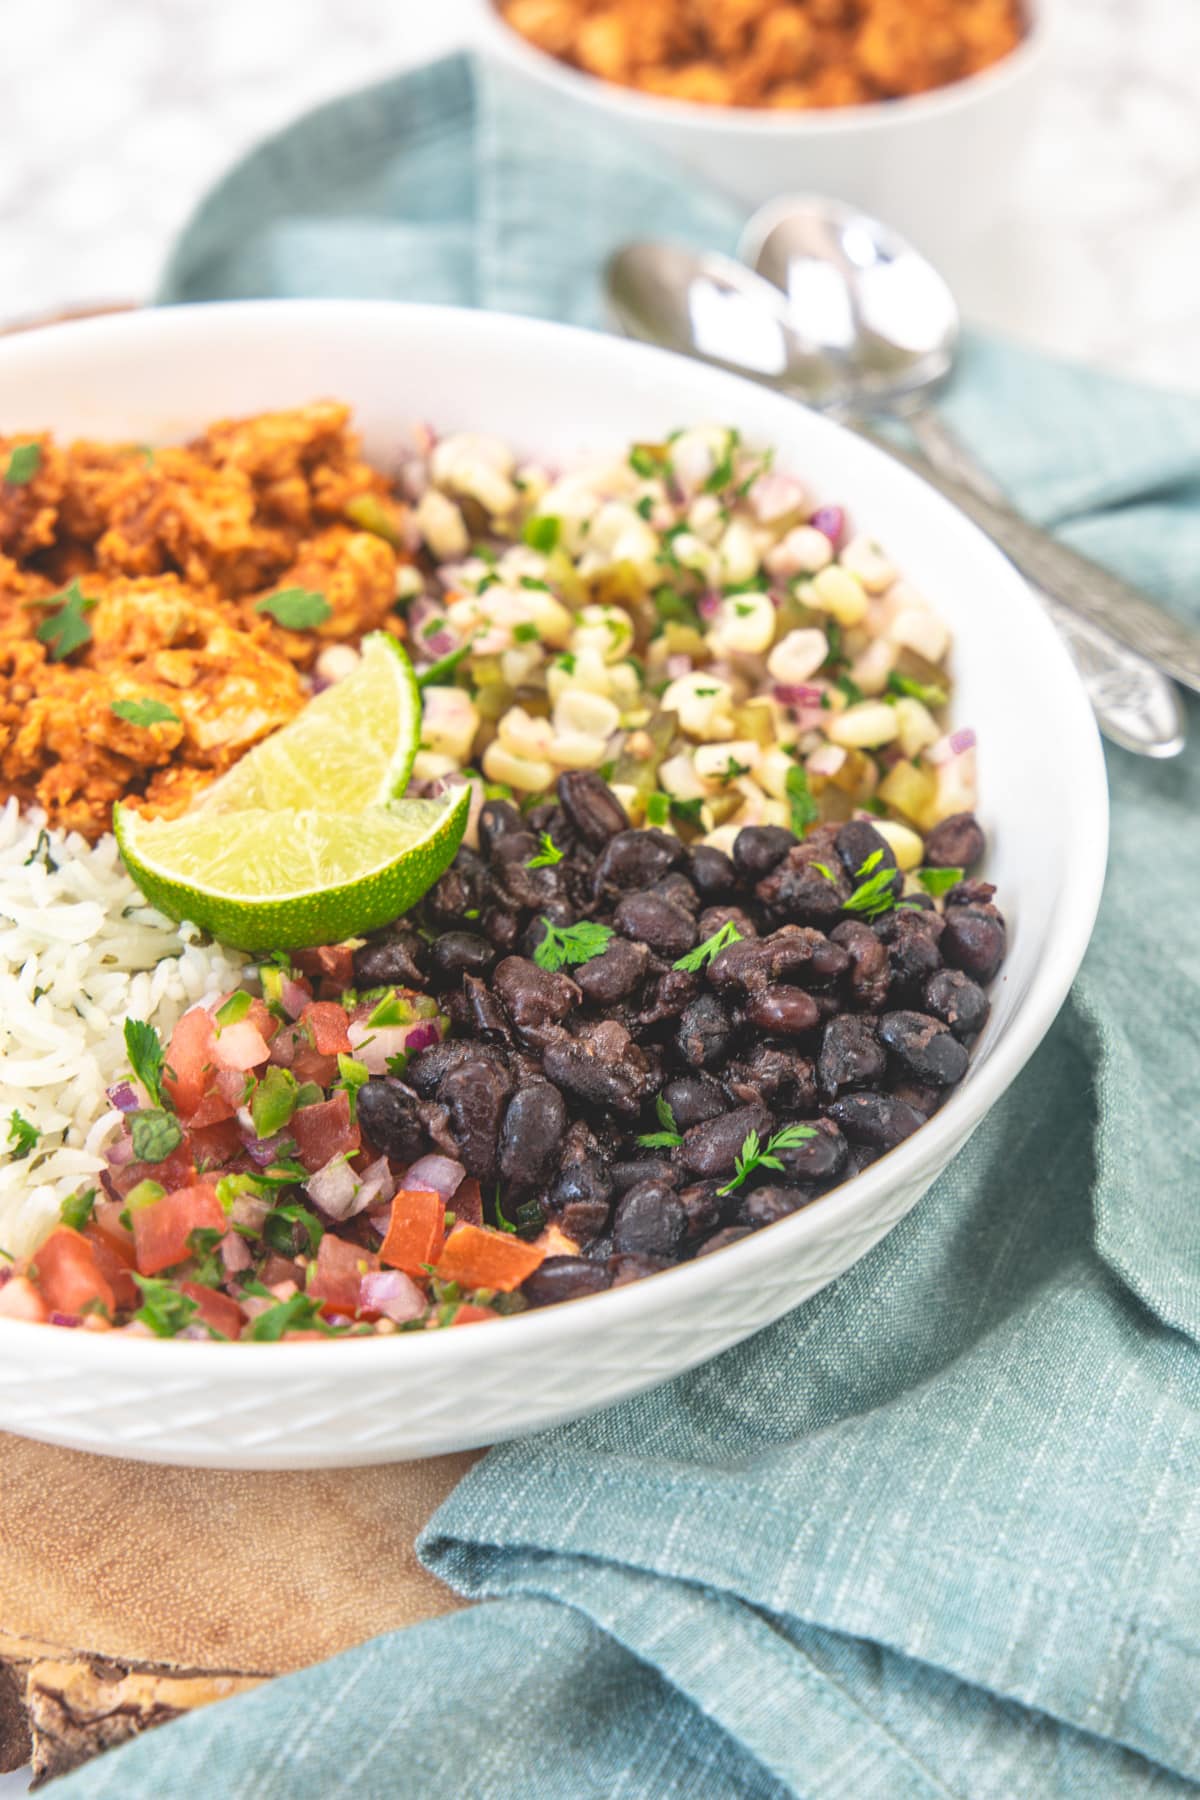 A burrito bowl with black beans, salsa, corn salsa, rice and limes.